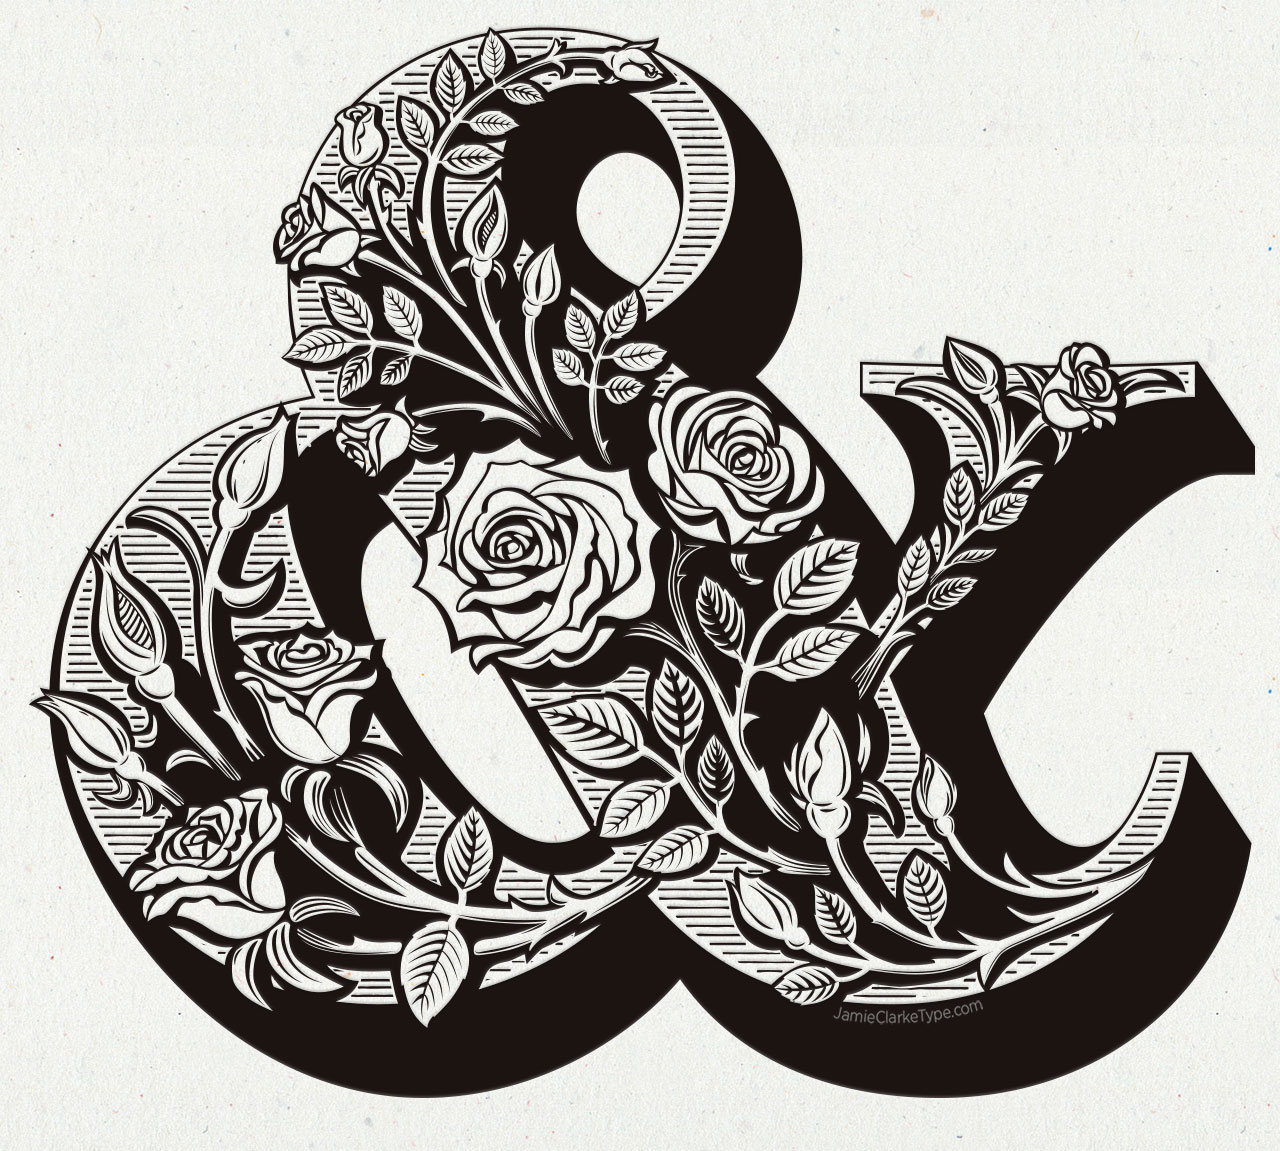 Chocolate Ampersand Rose Artwork, Pouchée inspired illustration | Jamie Clarke Type